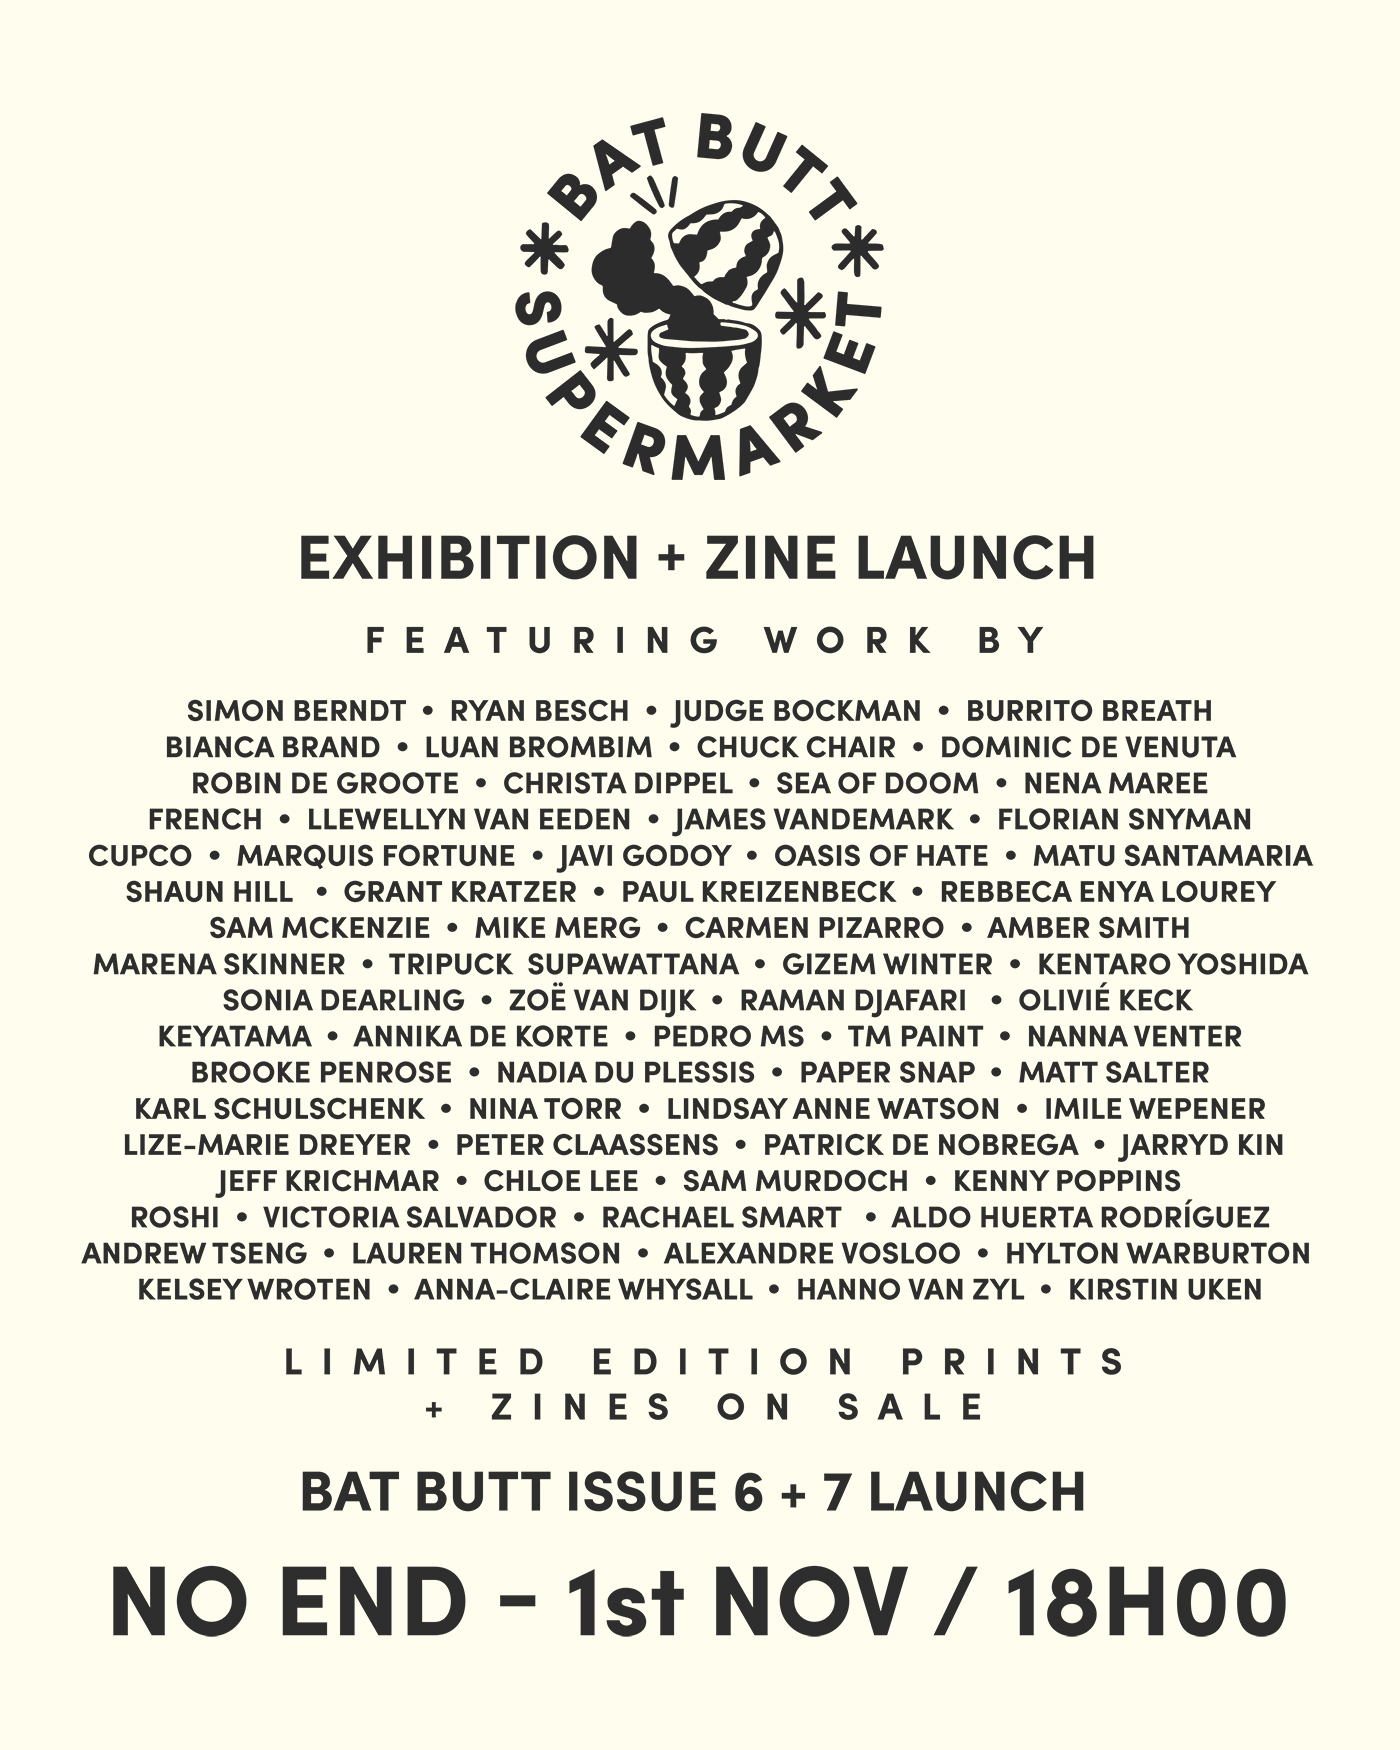 Bat Butt Supermarket Exhibition  no end prints limited edition lowbrow